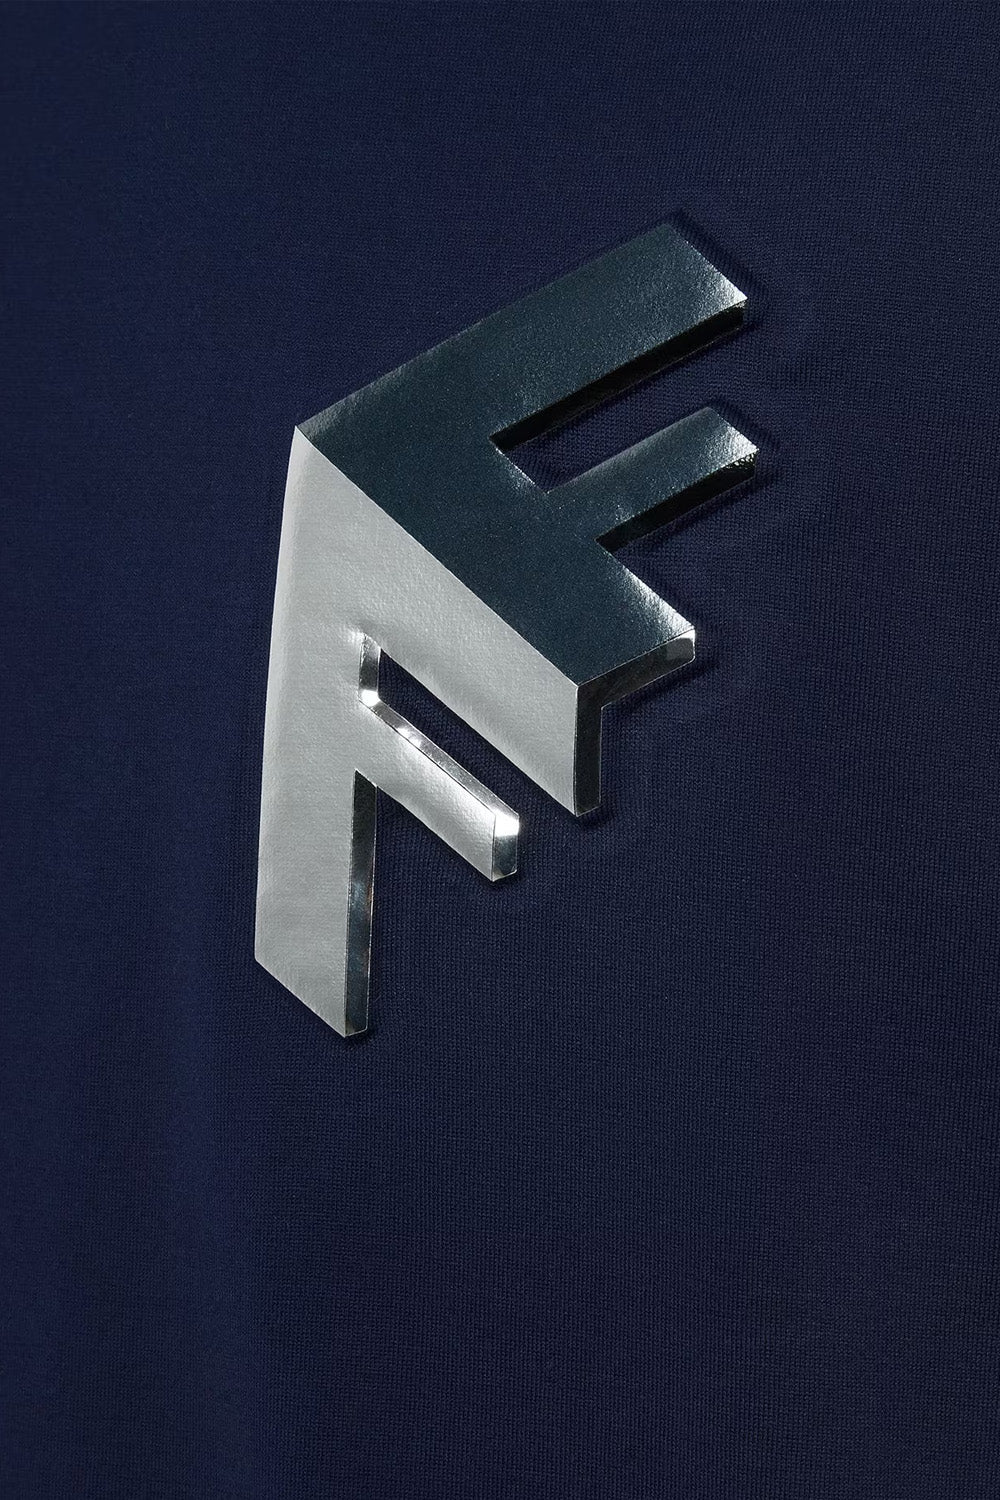 Fendi Logo Moonlight Block Crewneck T-Shirt